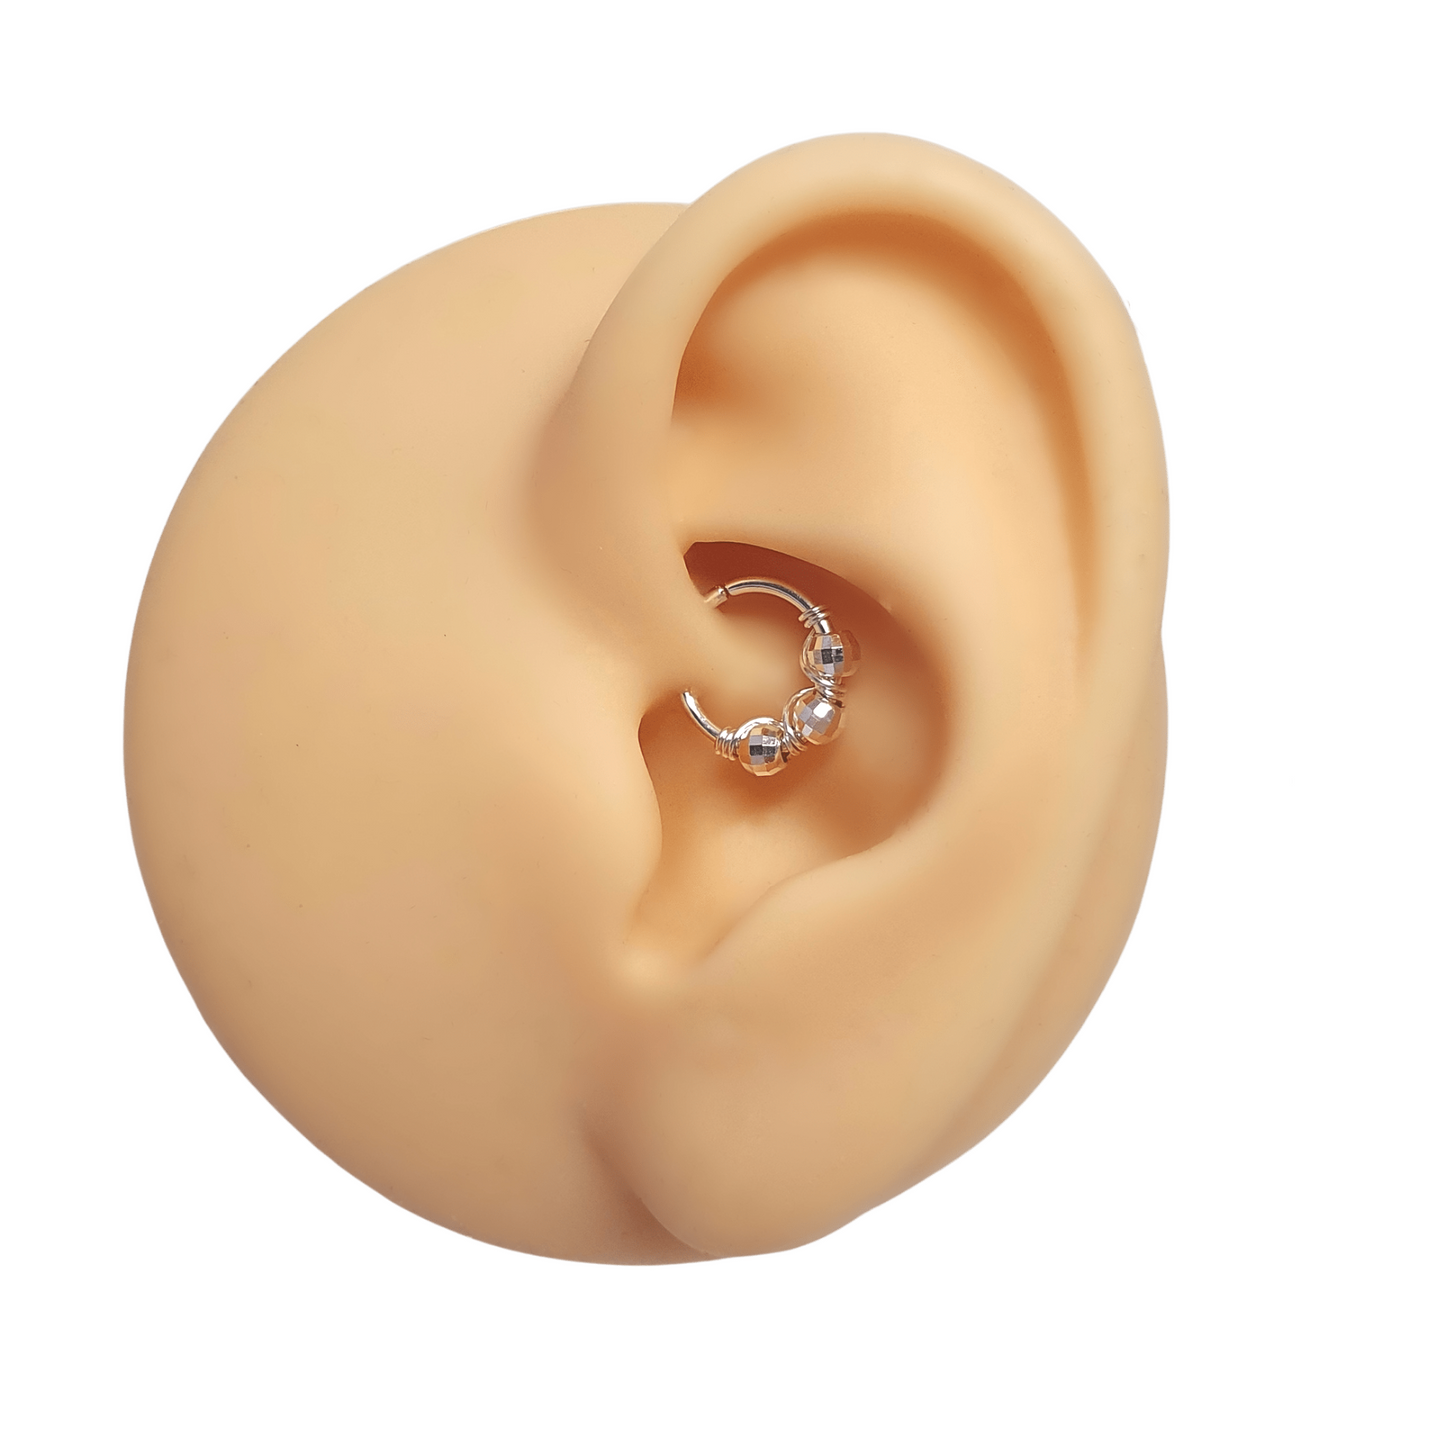 Disco Bead Sterling Silver Cartilage Seamless Hoop Earring. 8mm Inside Diameter